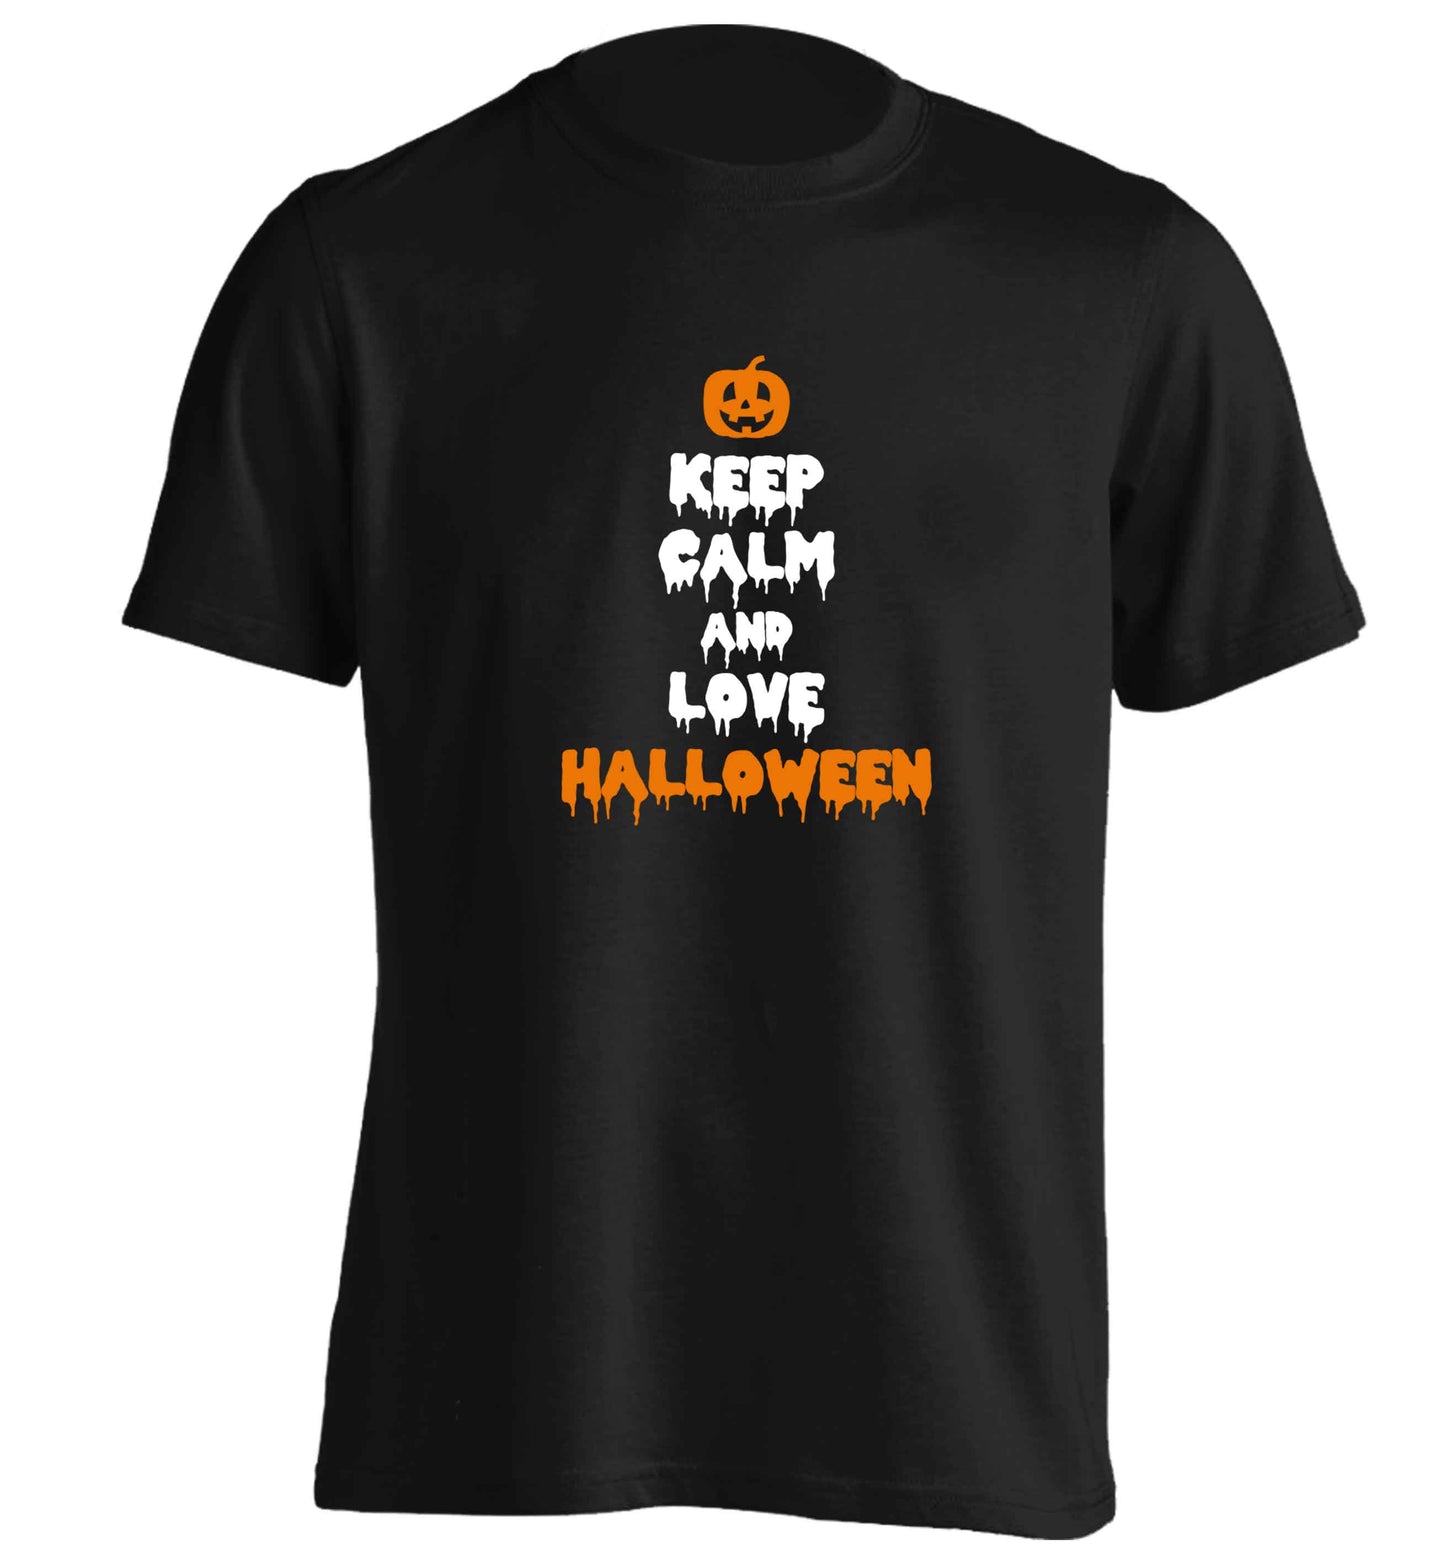 Keep calm and love halloween adults unisex black Tshirt 2XL